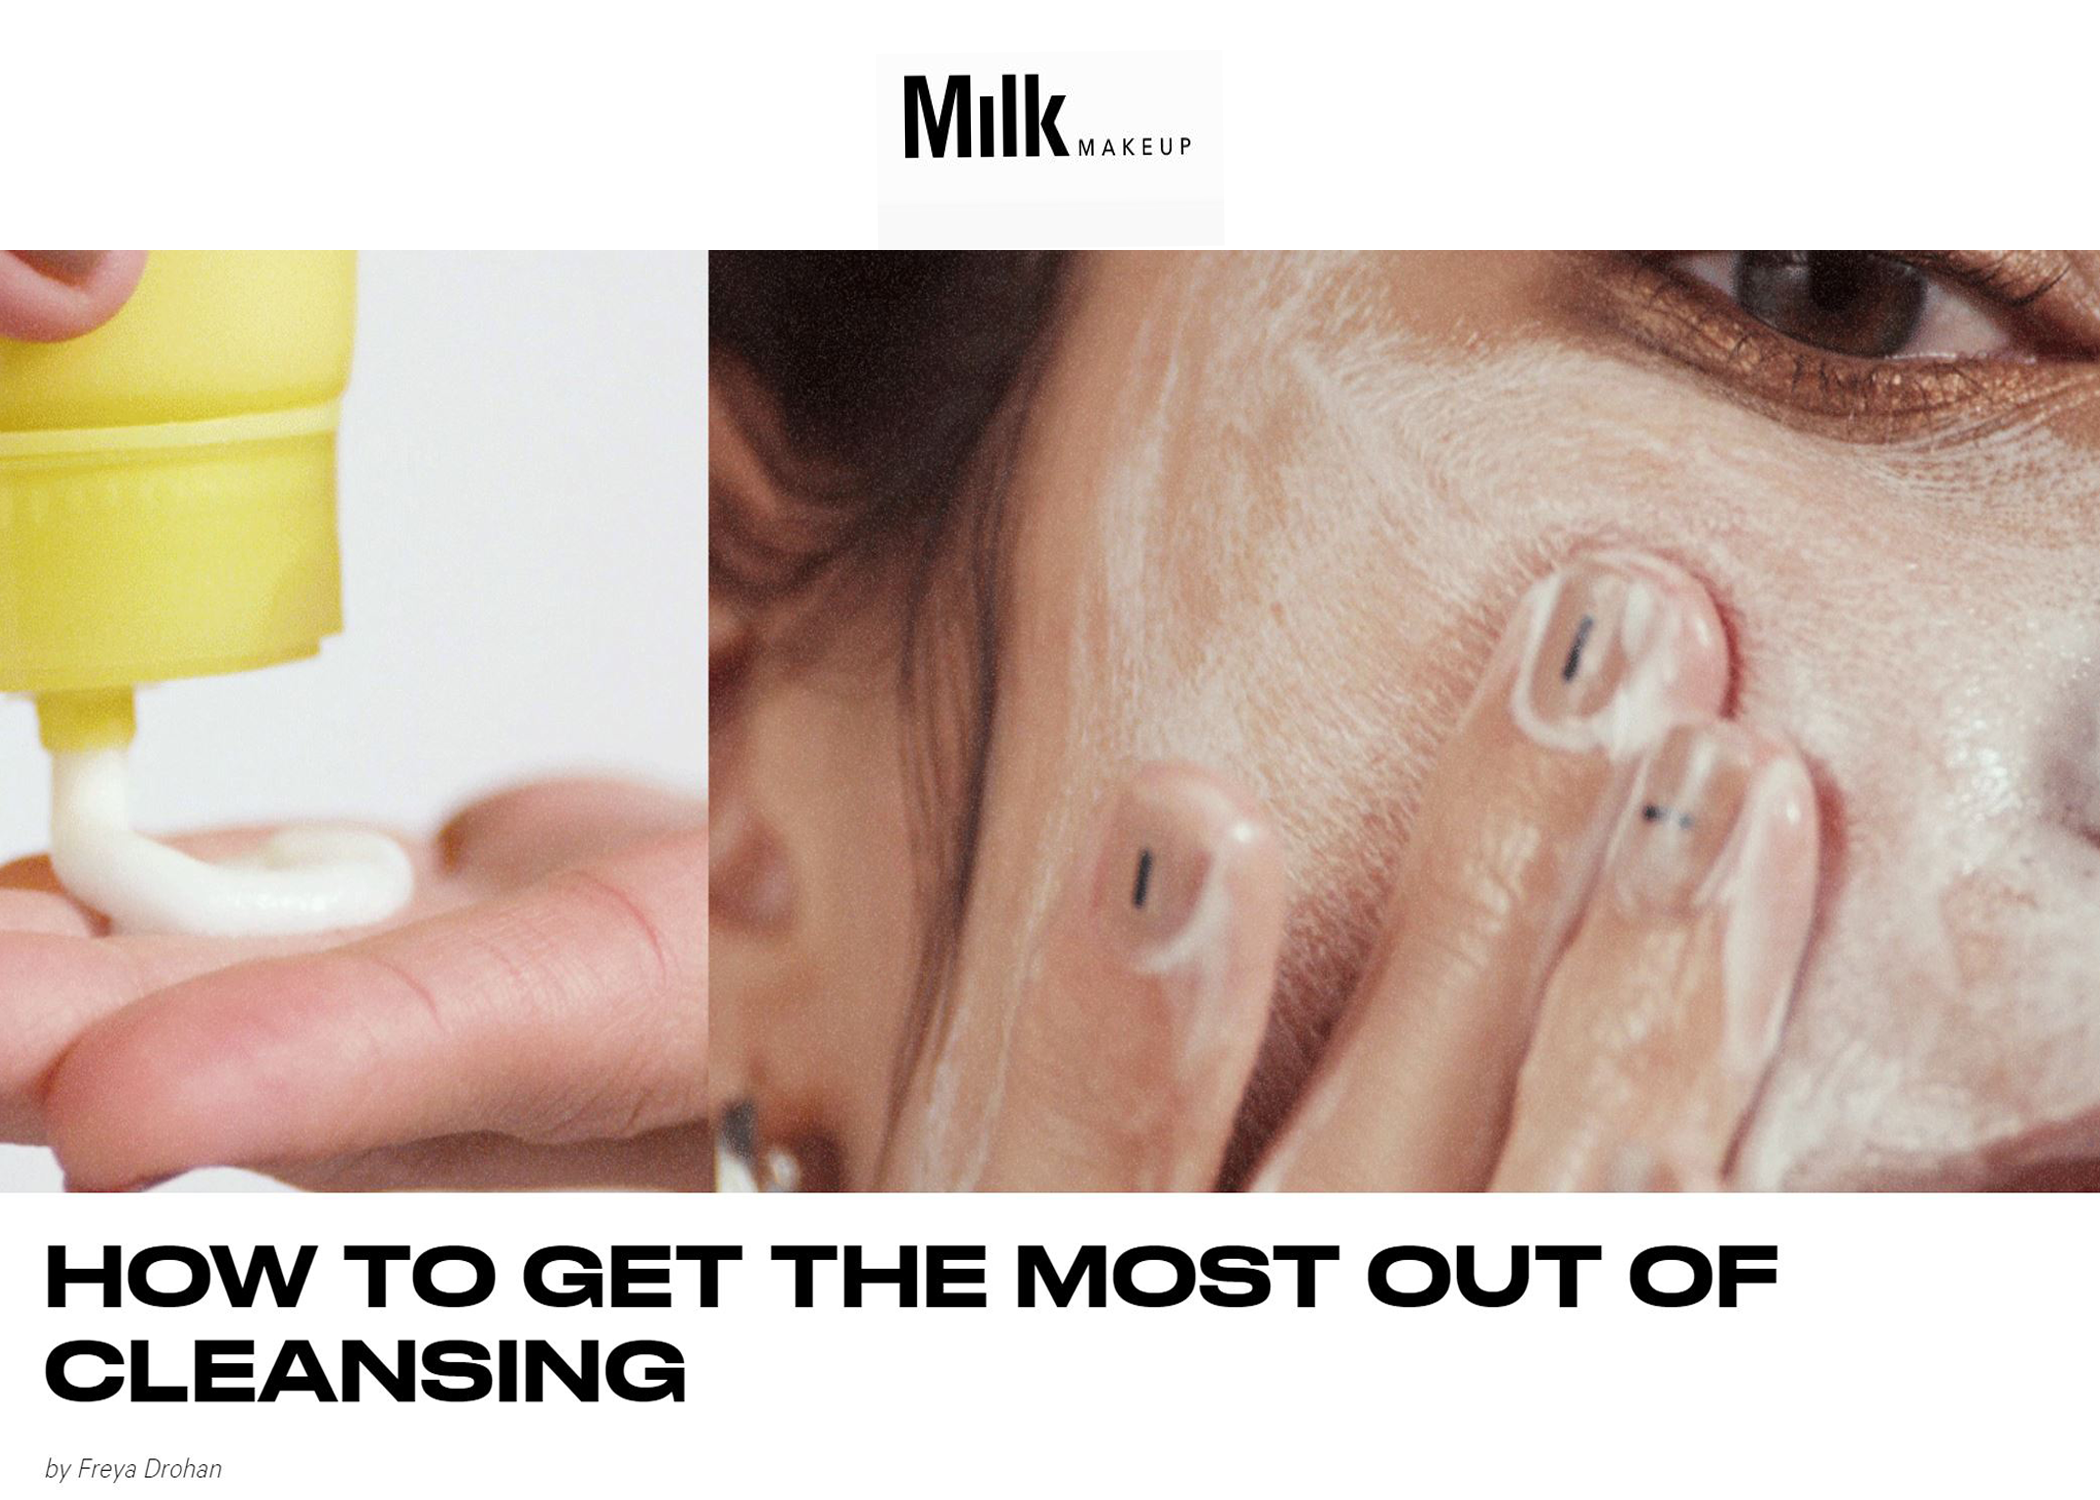 milk-makeup-cleansing-022020-larger.png